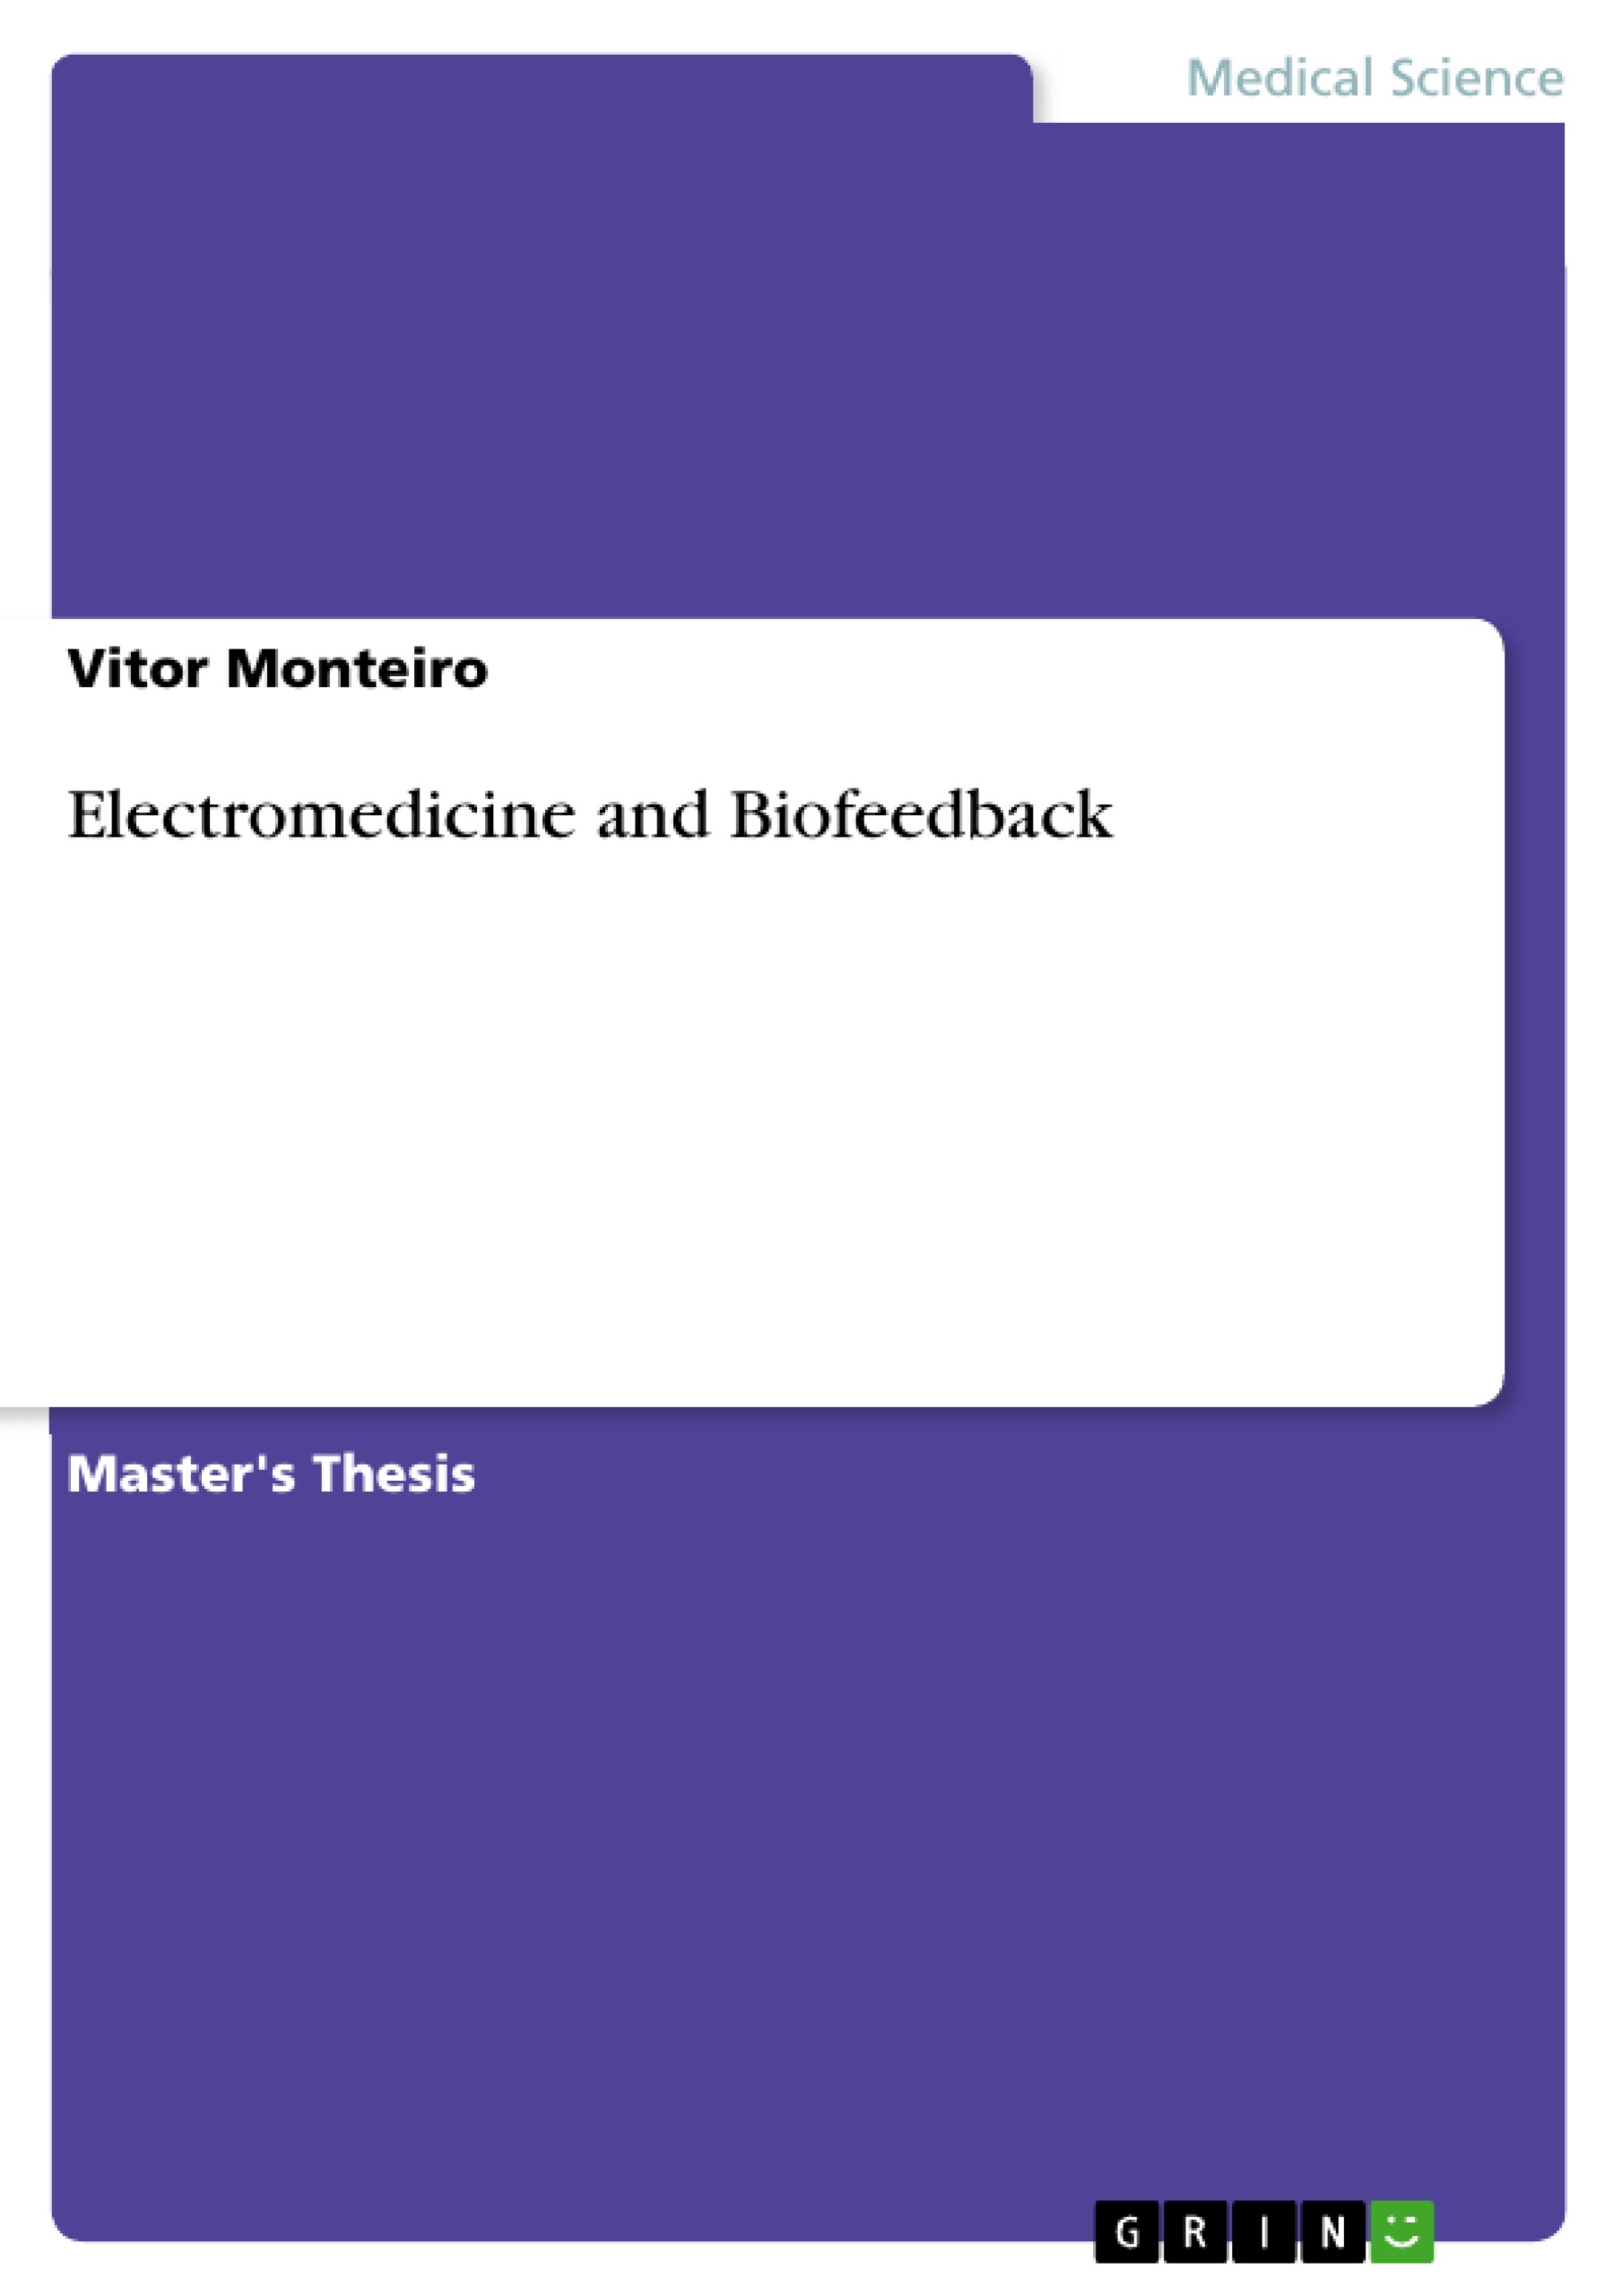 Electromedicine and Biofeedback